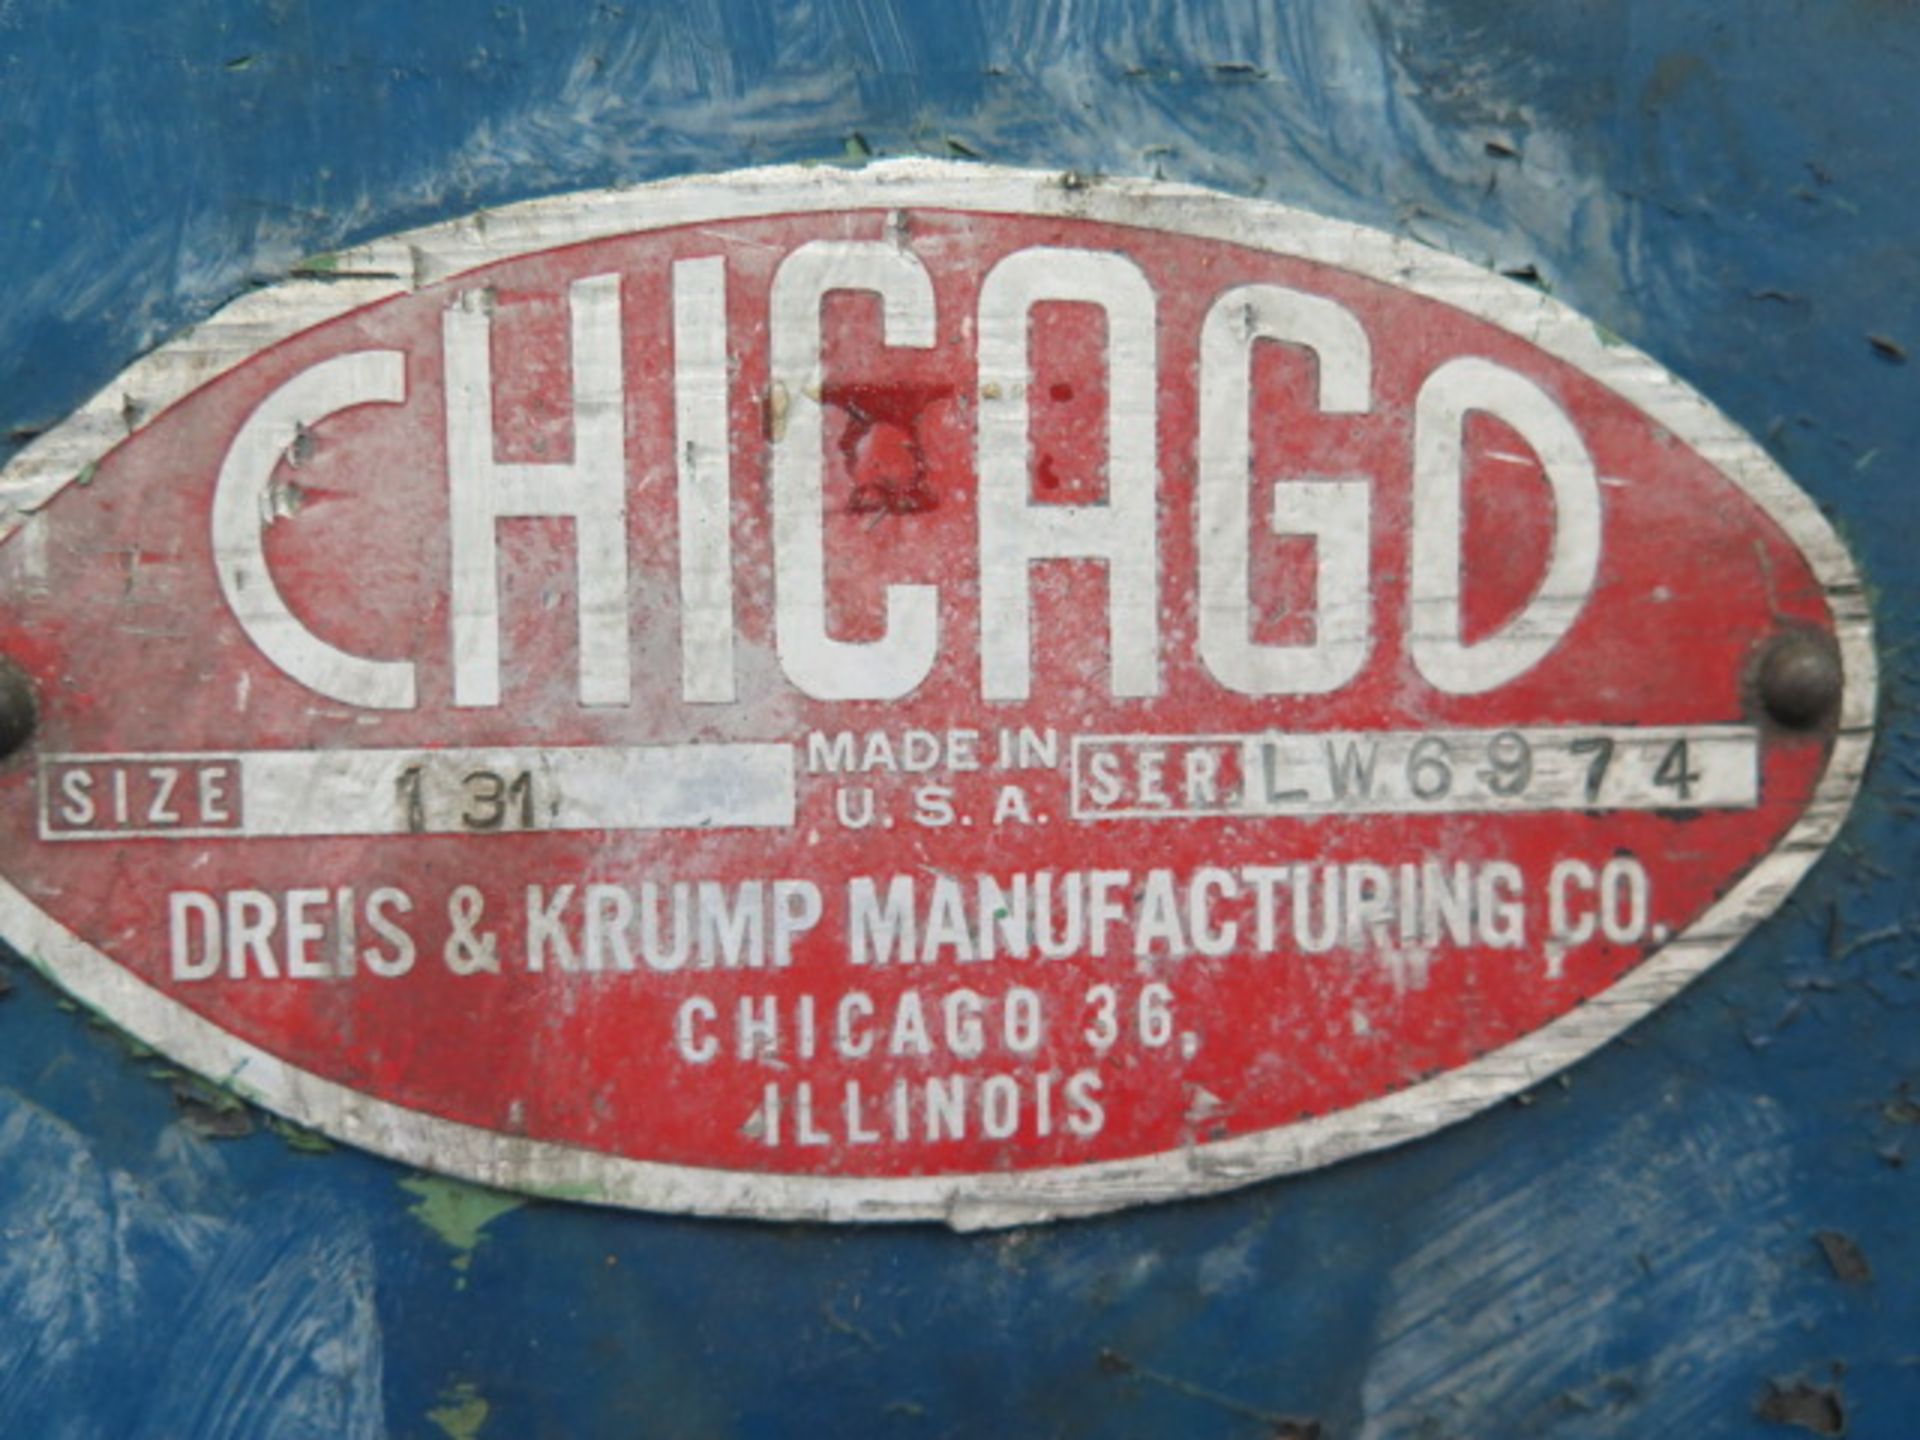 Chicago Size 131 15 Ton x 48” Press Brake s/n LW6974 w/ 6 ¼” Throat - Bild 5 aus 5